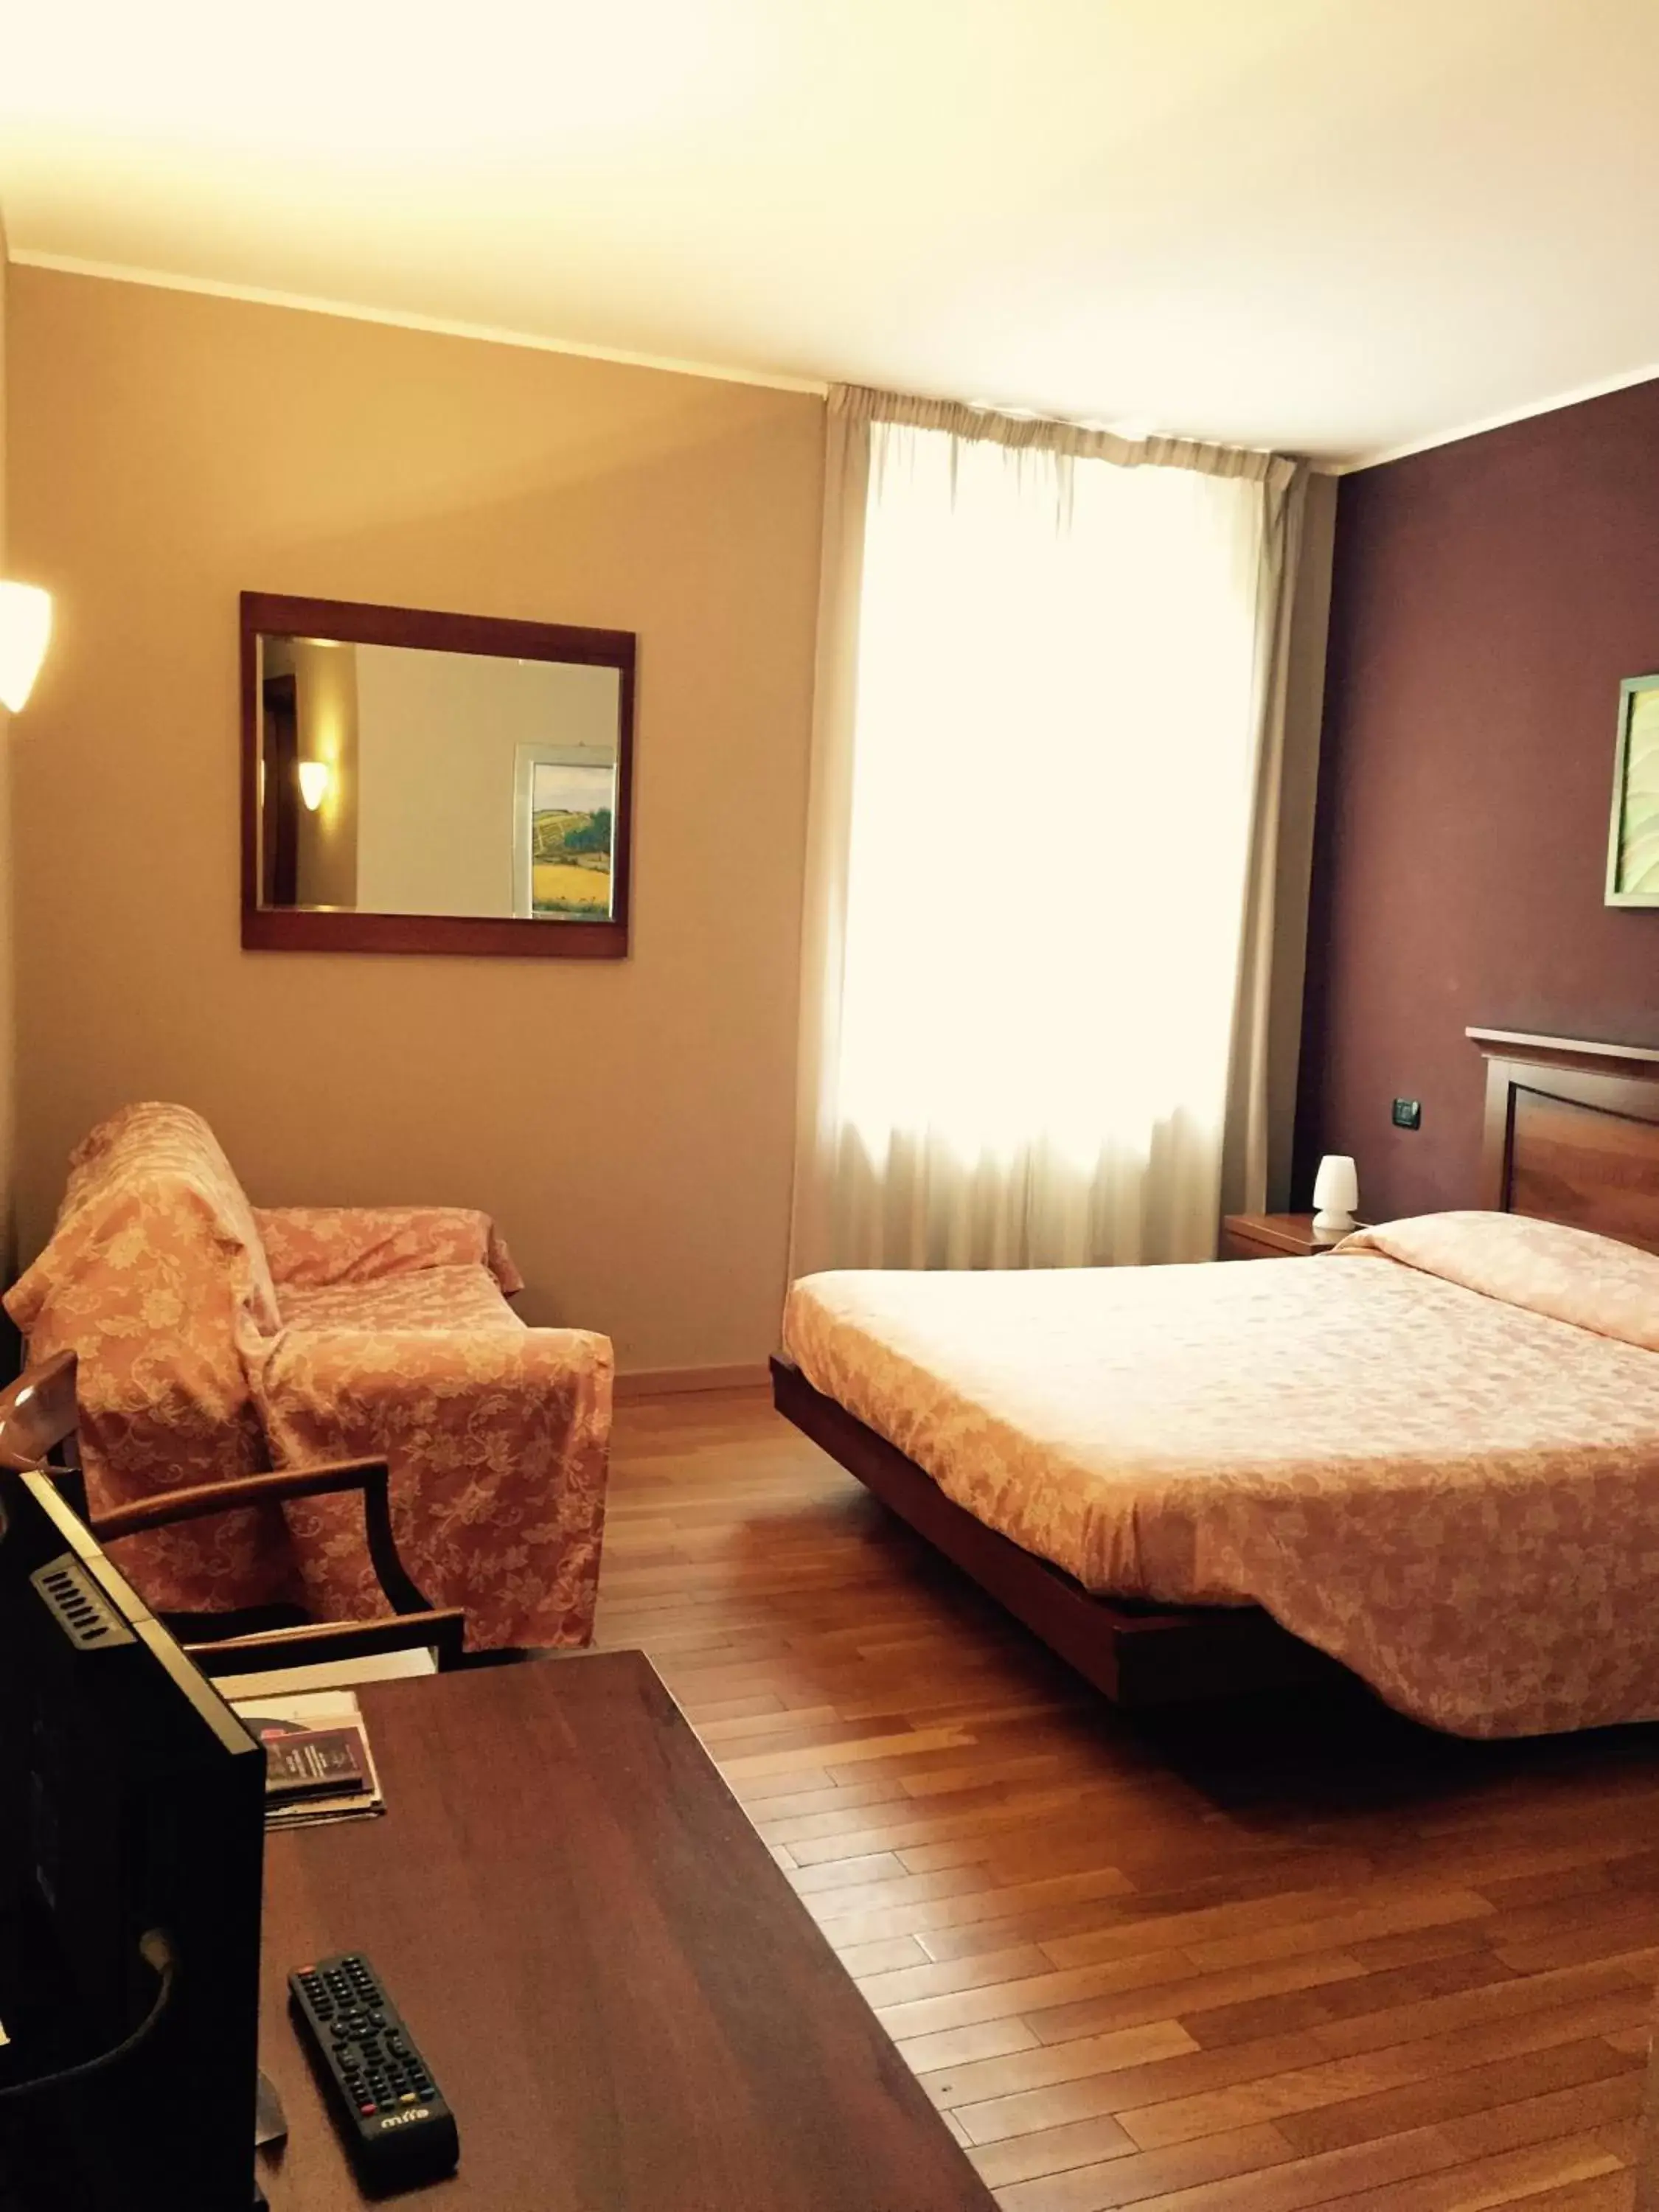 Bed, Room Photo in Albergo San Lorenzo